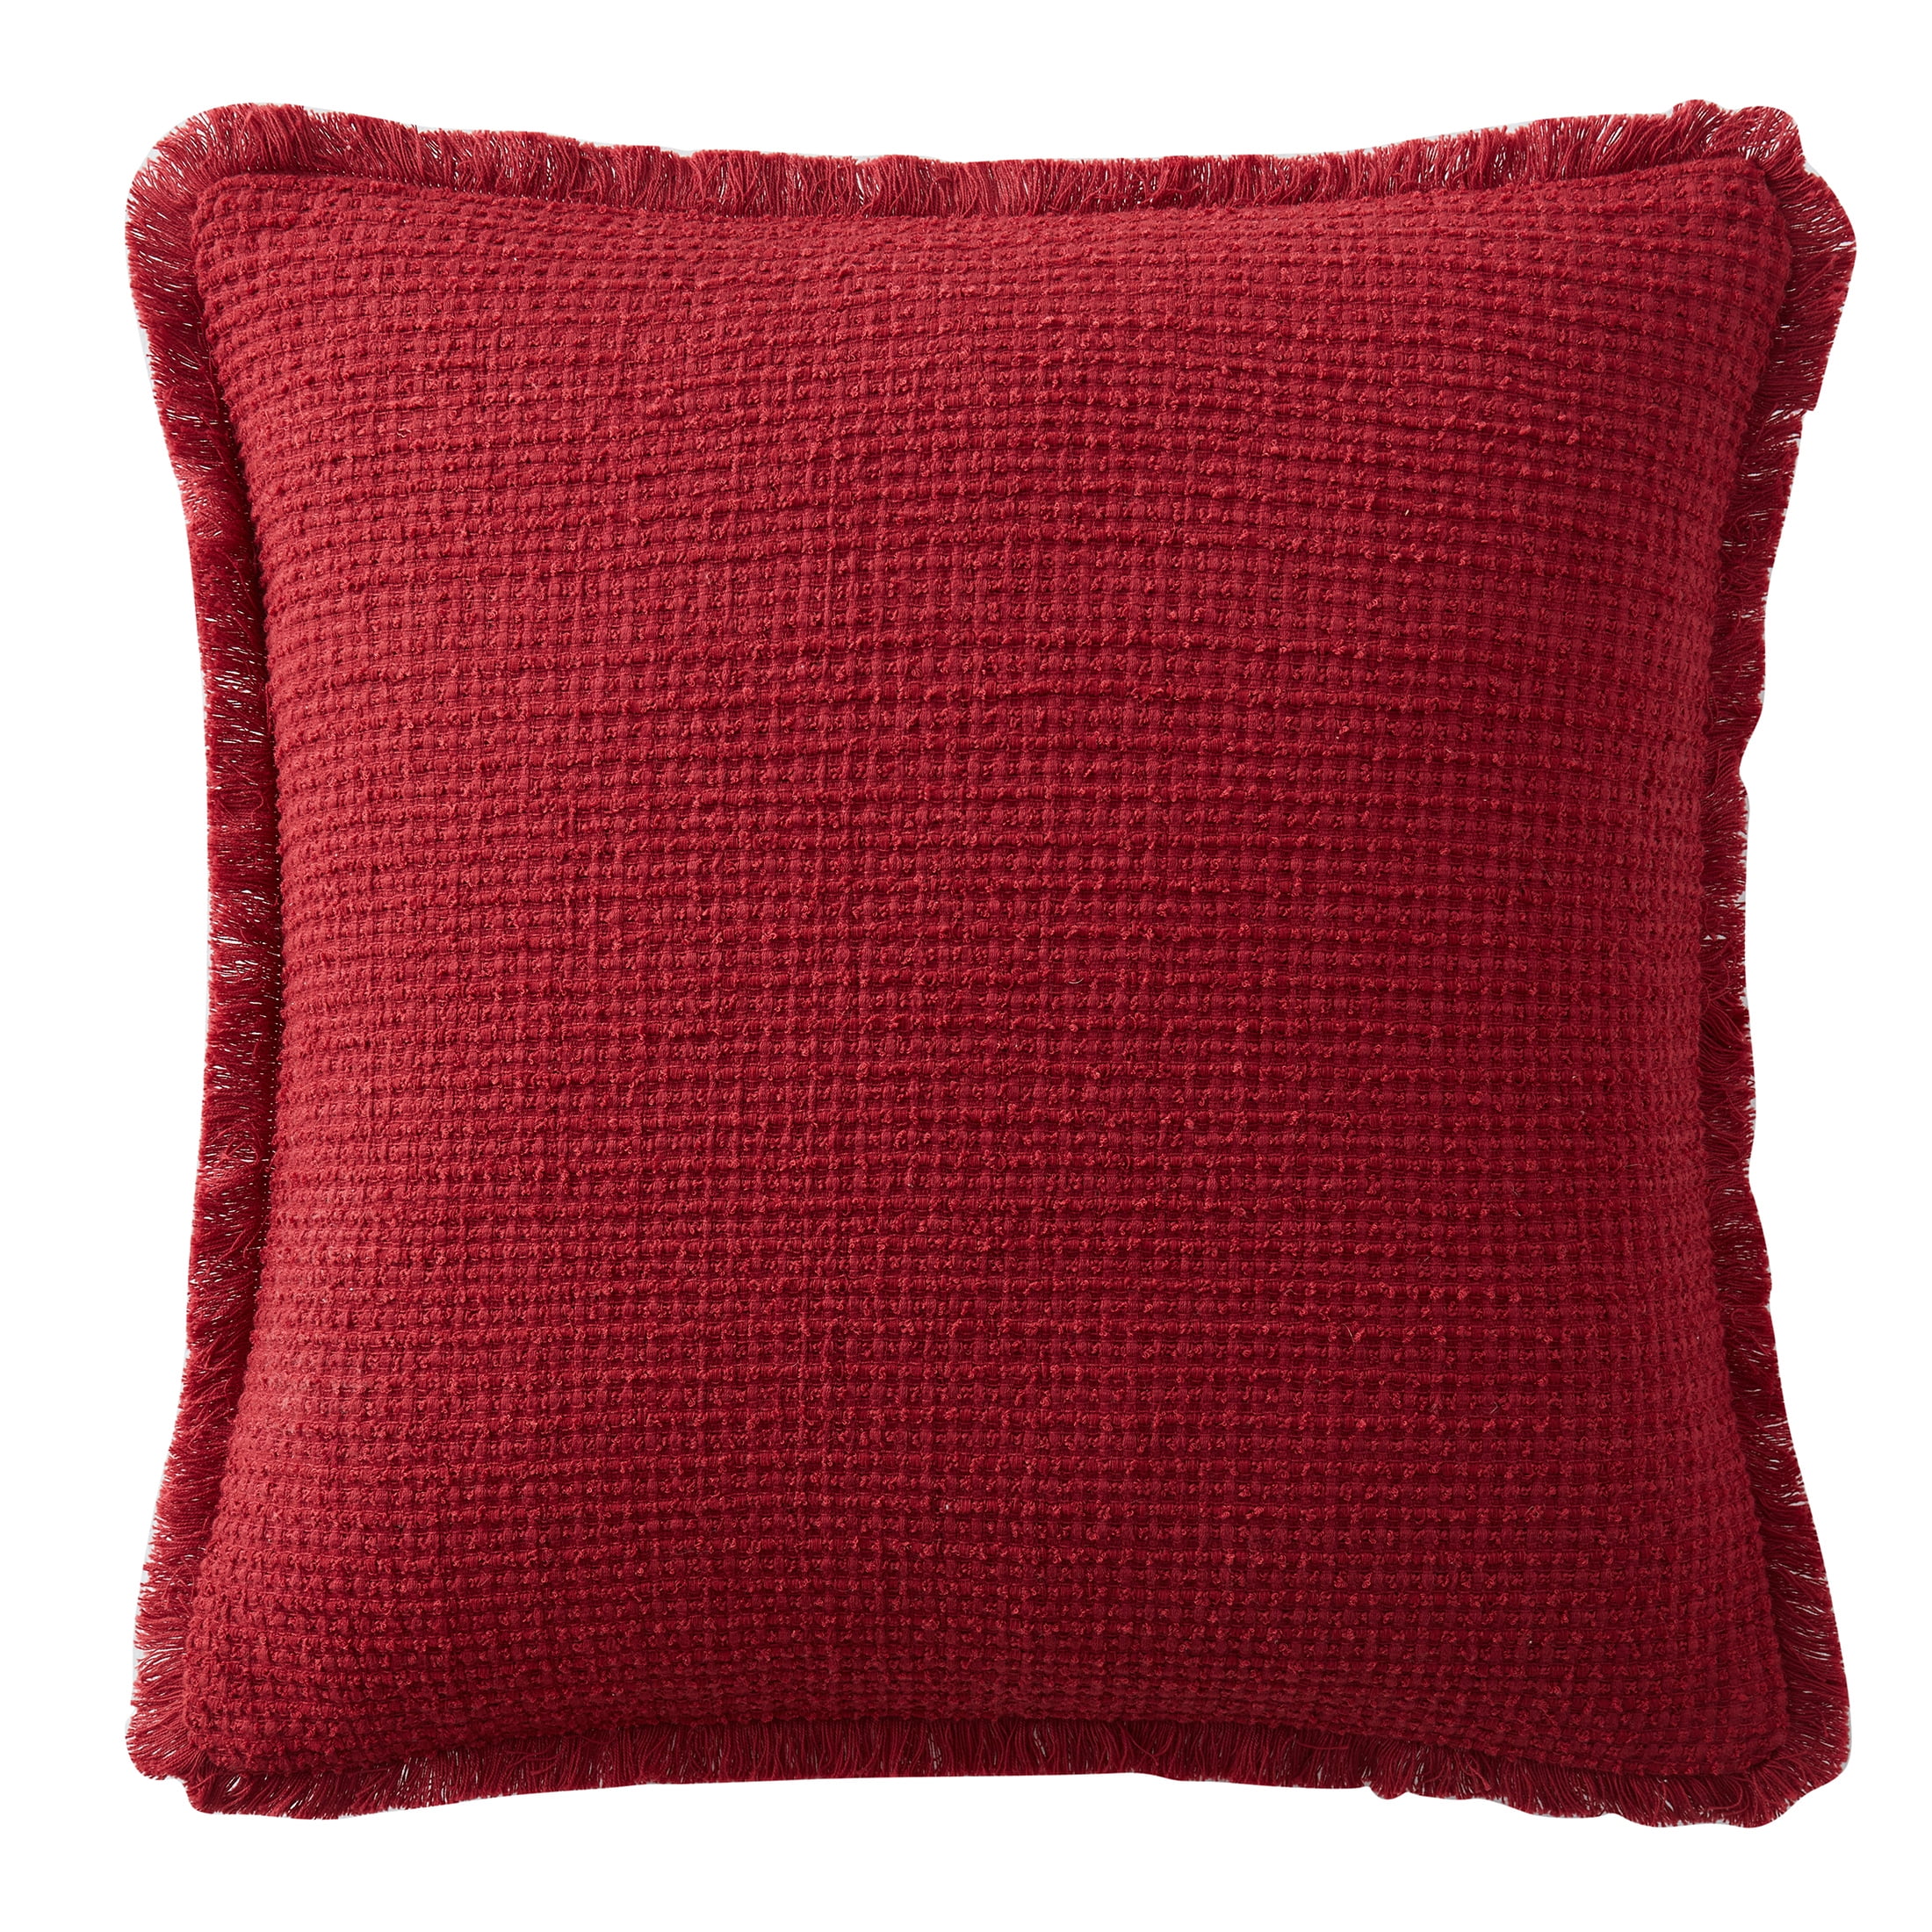 Lumbar Pillow Cover One and Done Balinese Fabric Boho Merah Merah 14 x 36